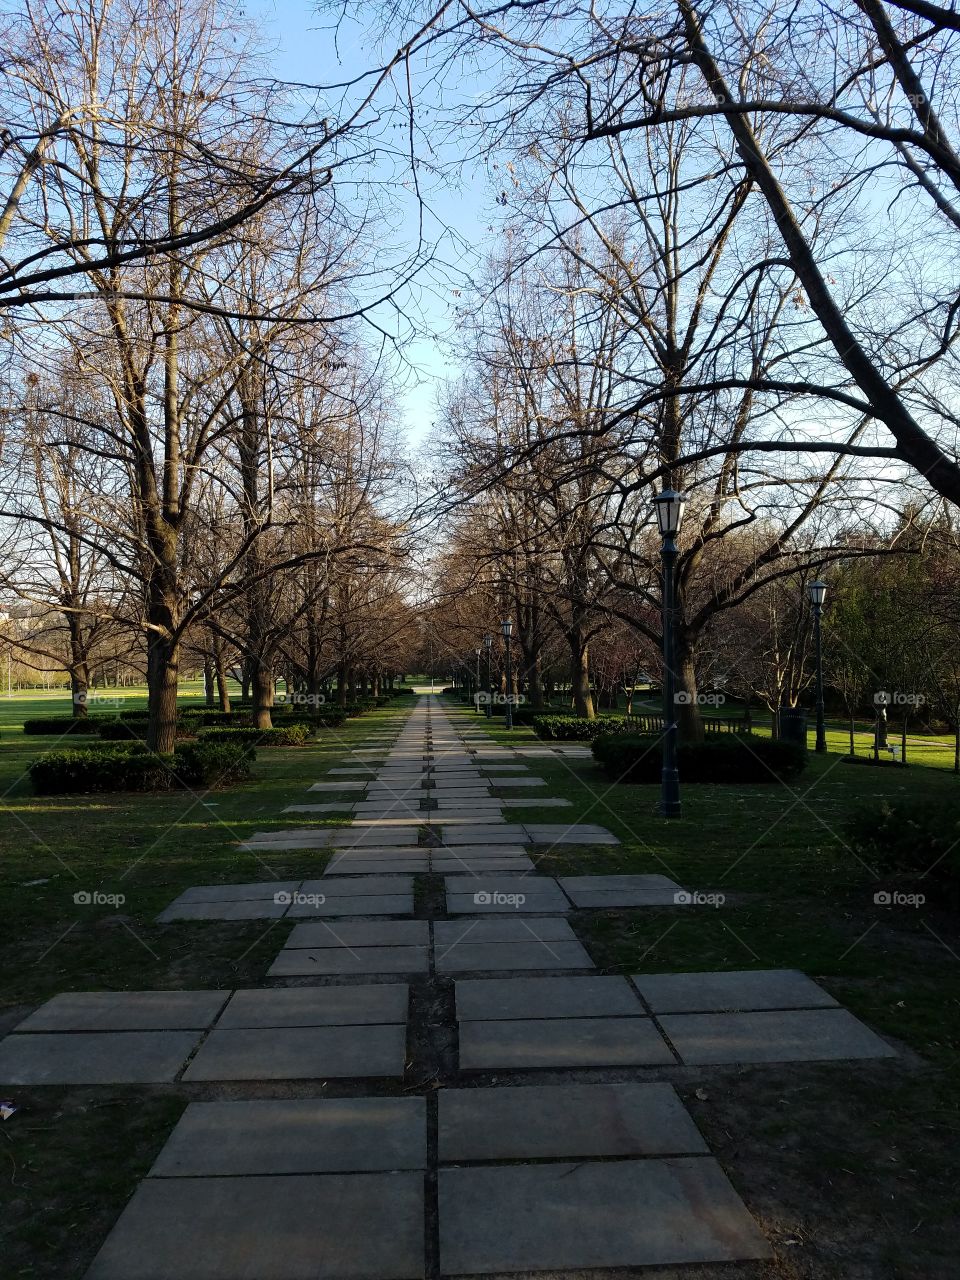 Walkway in a park